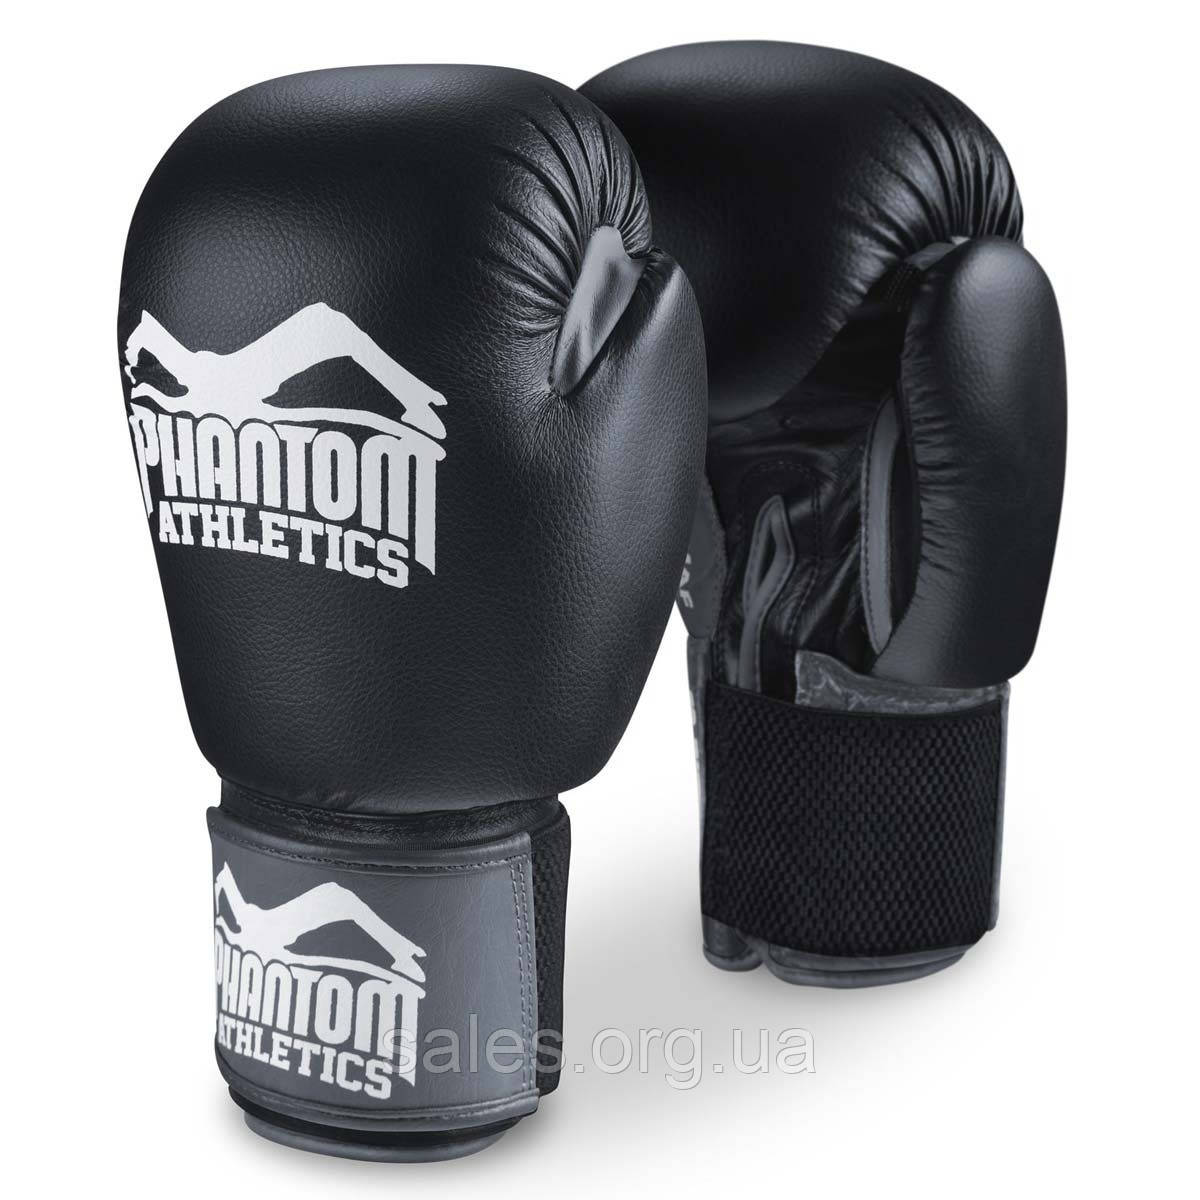 Боксерські рукавиці Phantom Ultra 14 унцій Black SC, код: 8080741